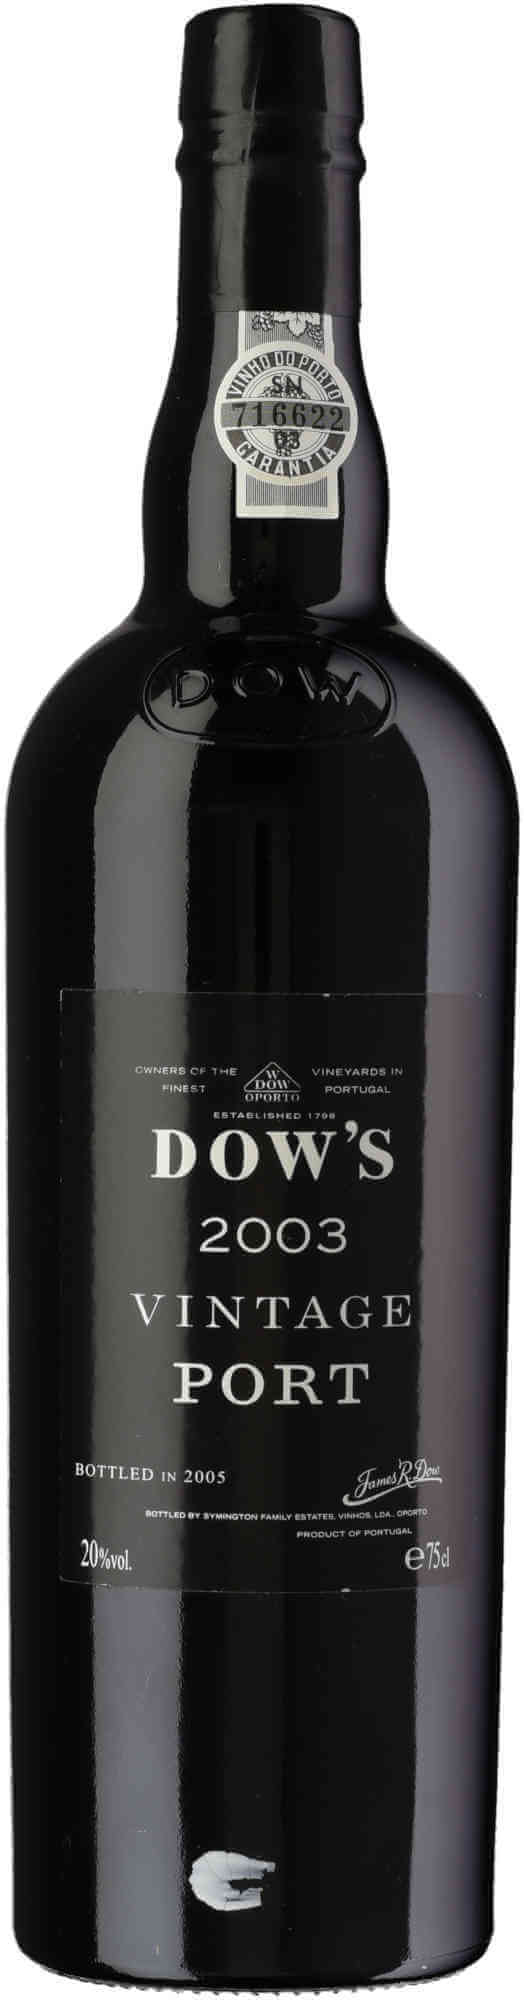 Dows-Vintage-Port-2003